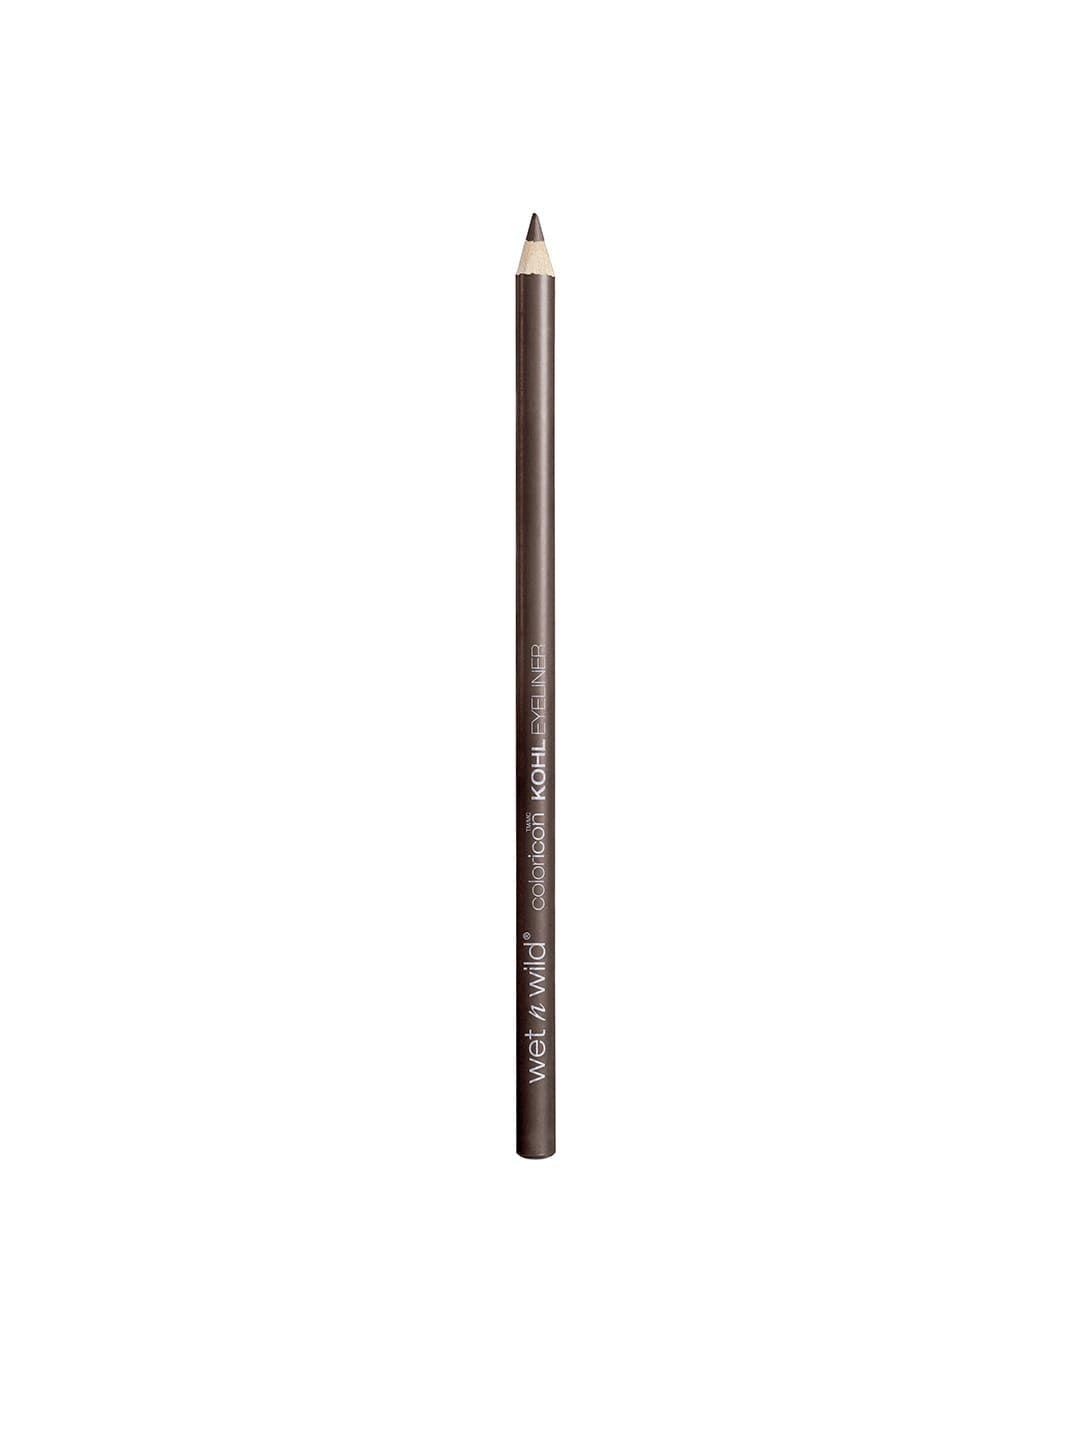 wet n wild color icon kohl liner pencil - pretty in mink e602a 1.4g